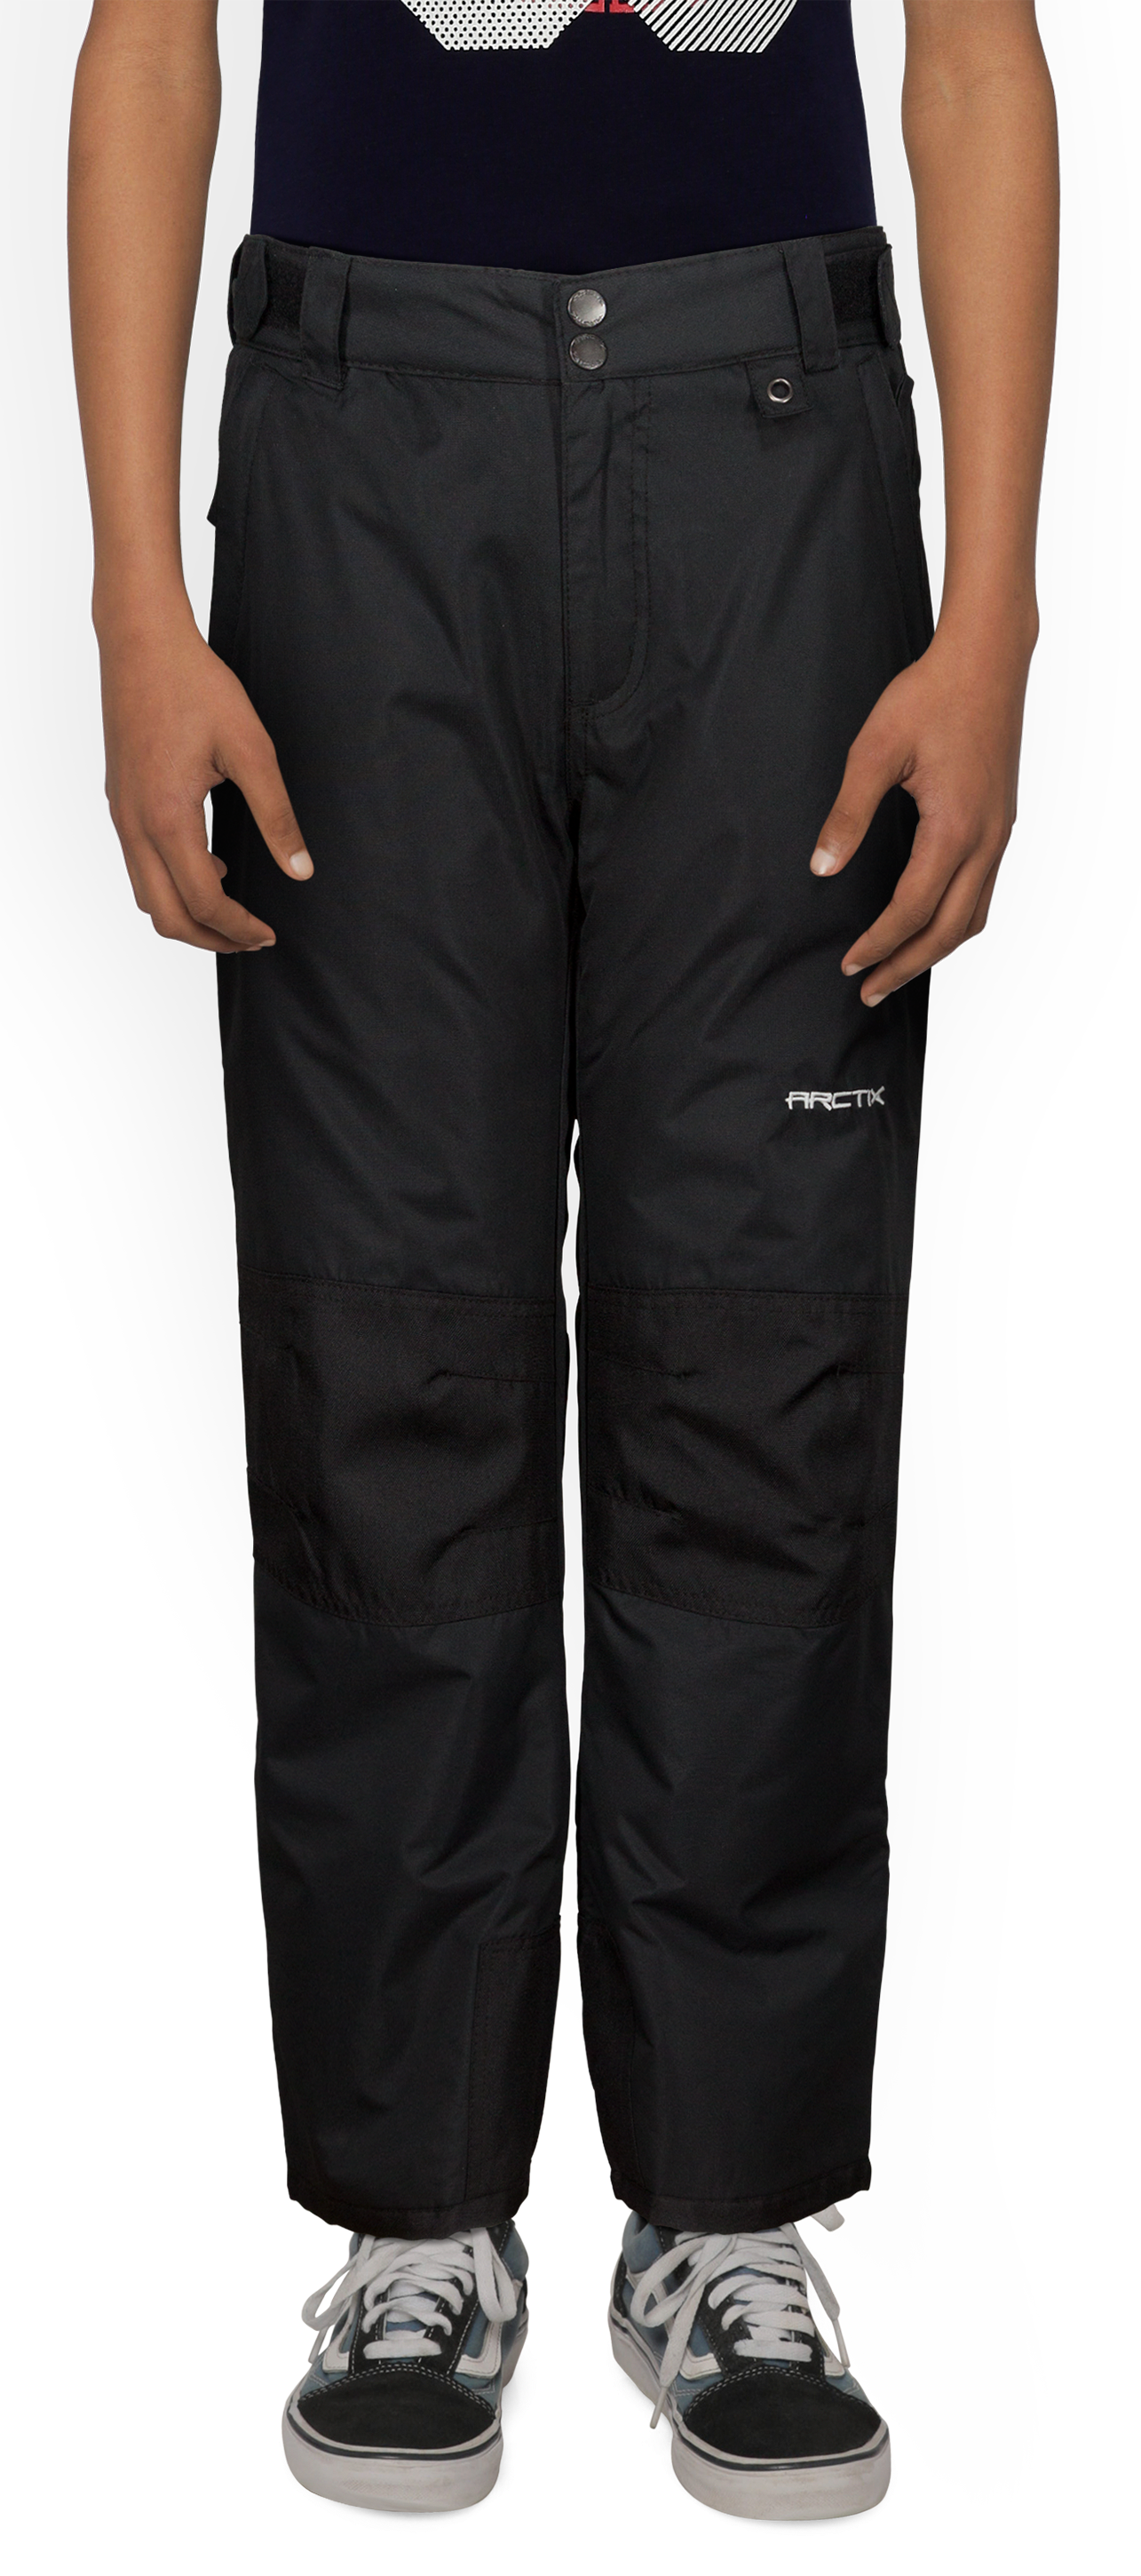 Arctix Kids Snow Pants with Reinforced Knees and Seat Medium Black